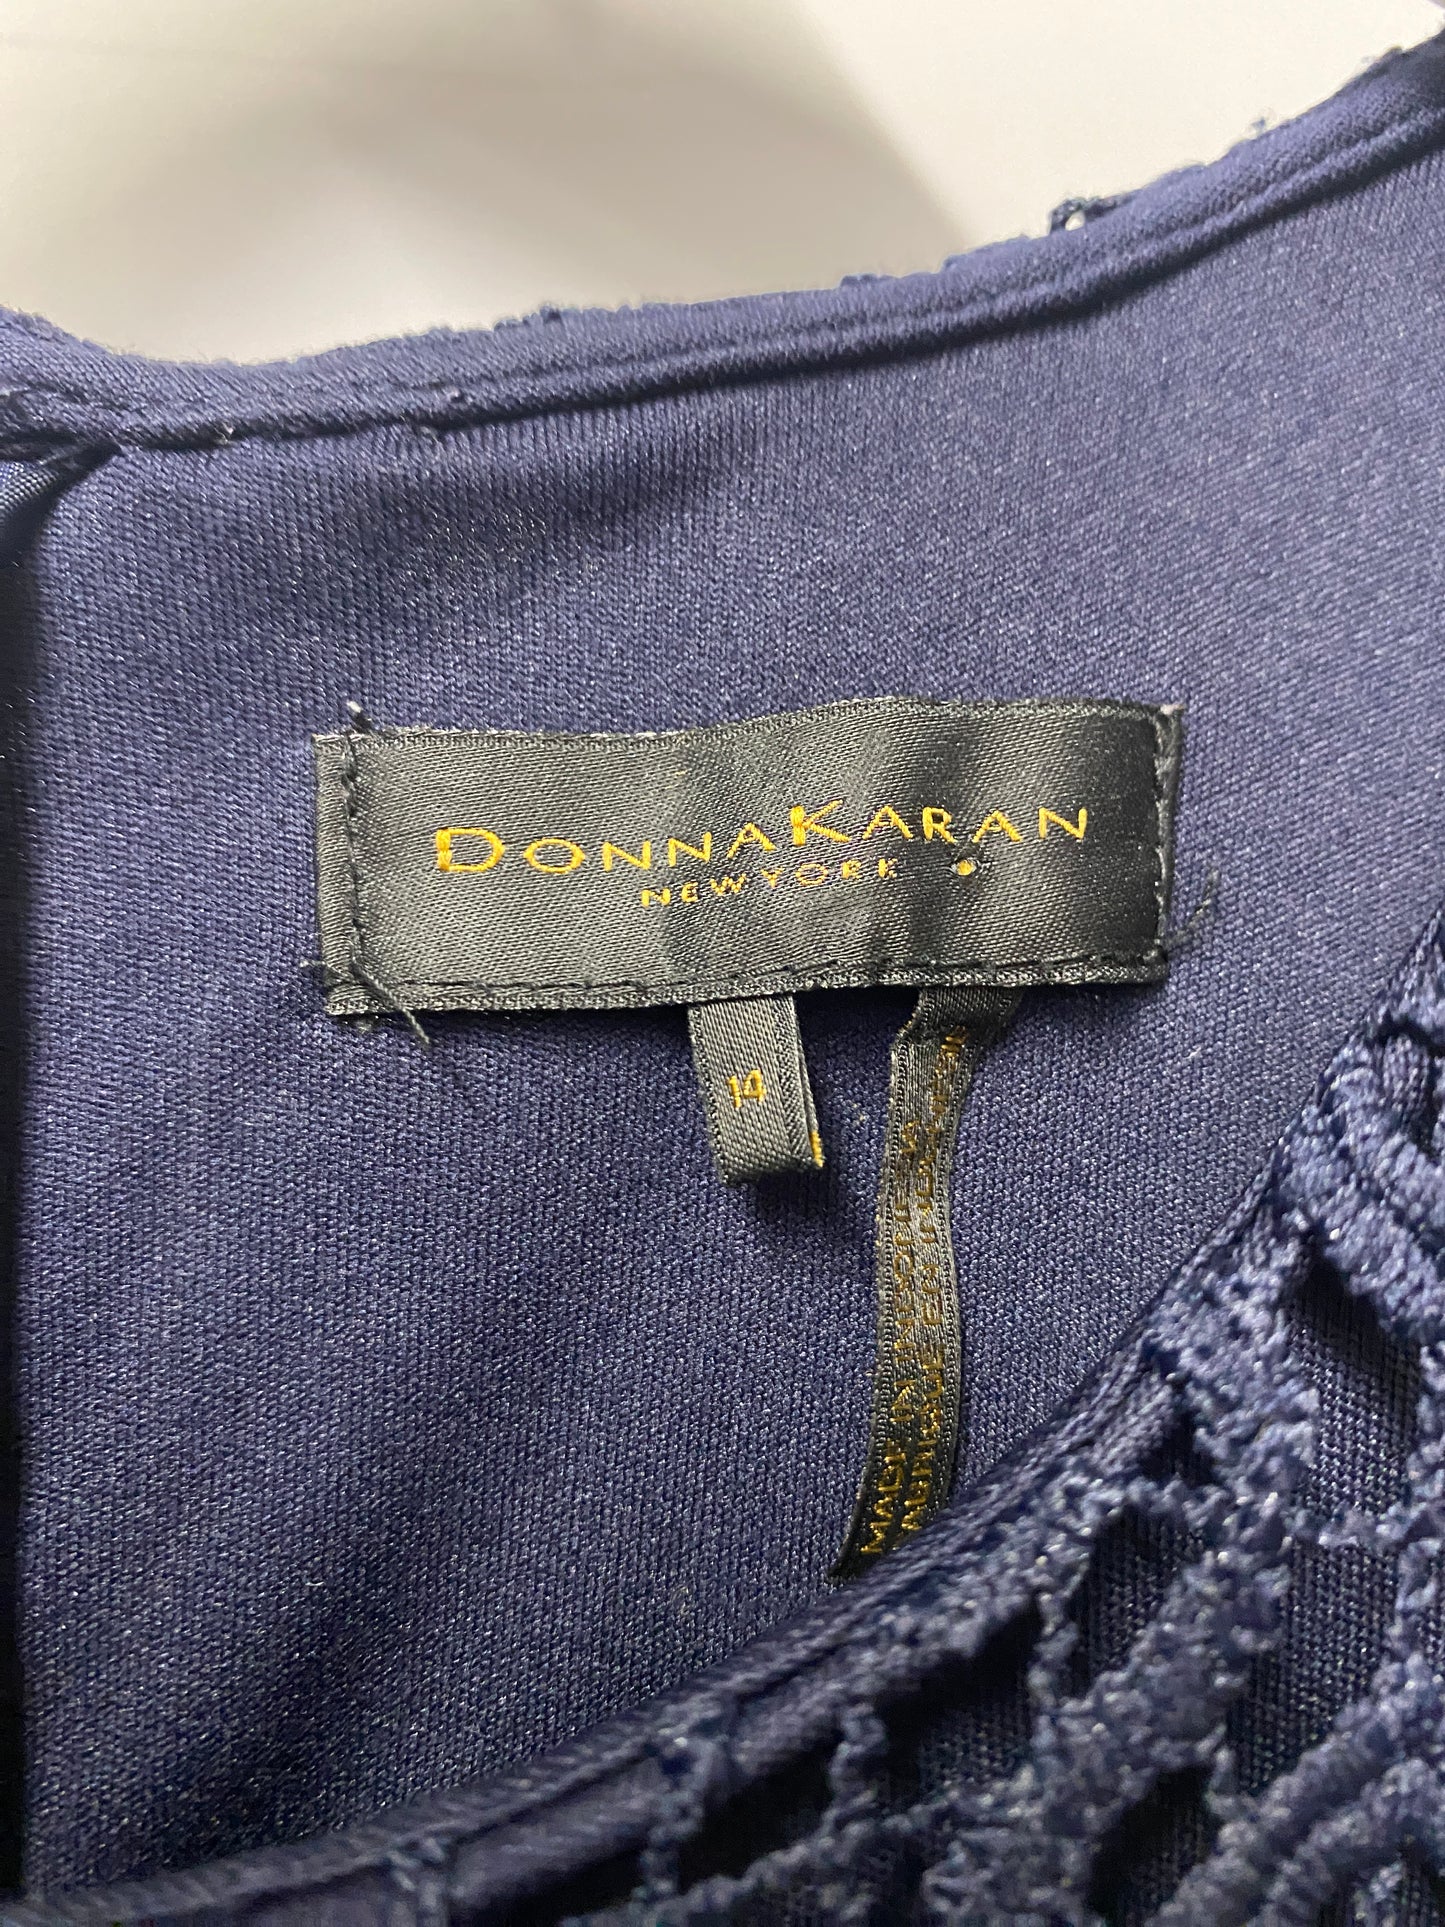 Donna Karen Navy Lace Overlay Midi Shift Dress 14